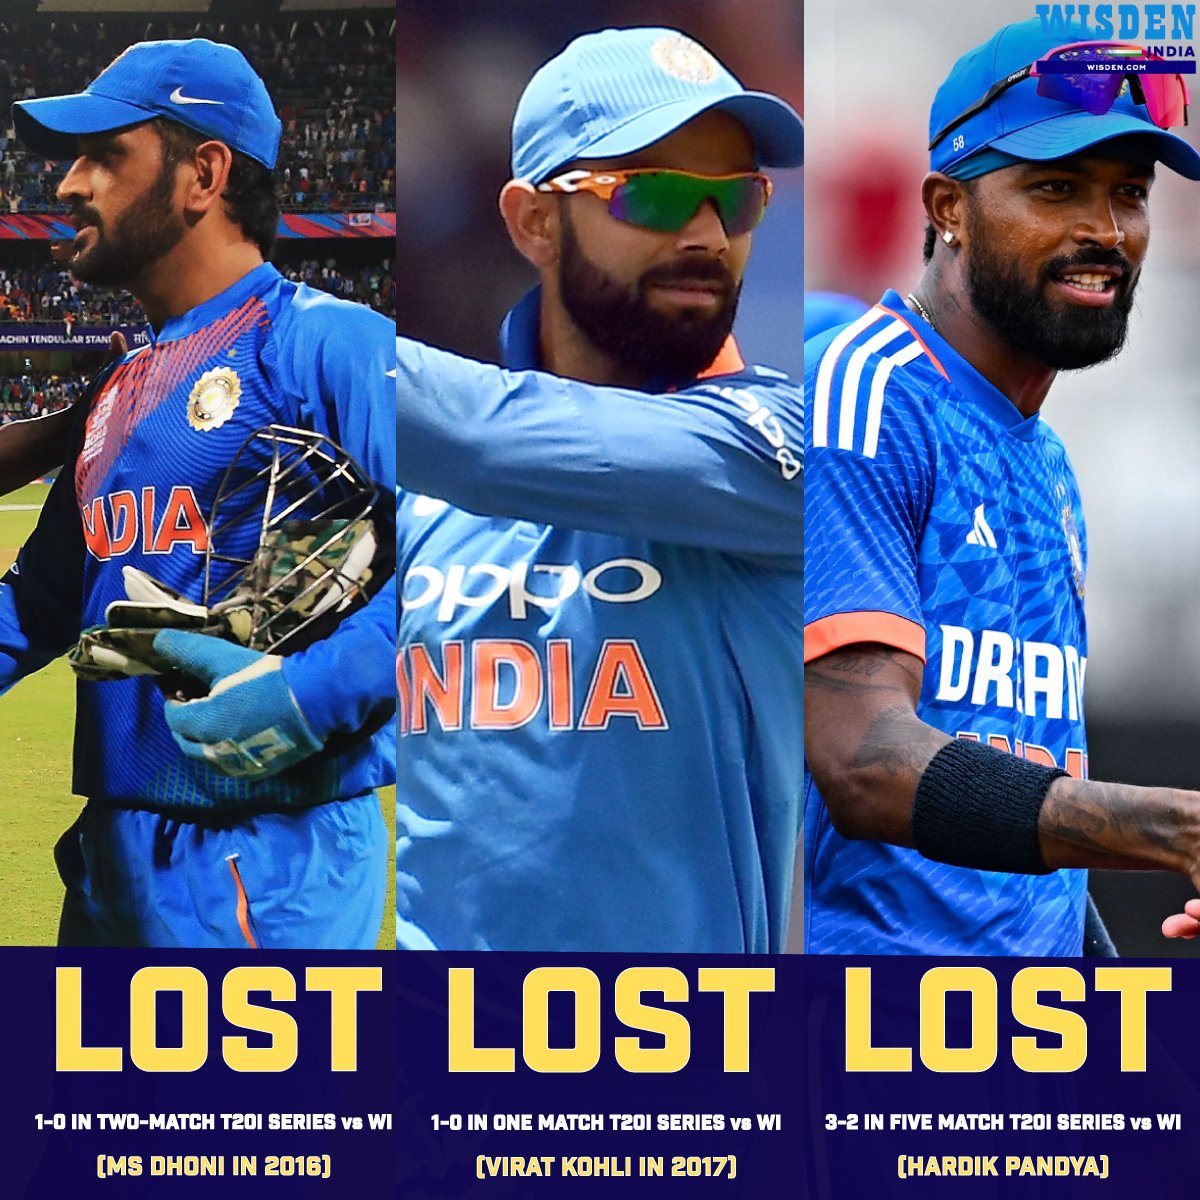 2016 ❌
2017 ❌
2023 ❌

A tough loss for Hardik Pandya and his men.

#HardikPandya #India #RohitSharma #WIvsIND #Cricket #T20Is